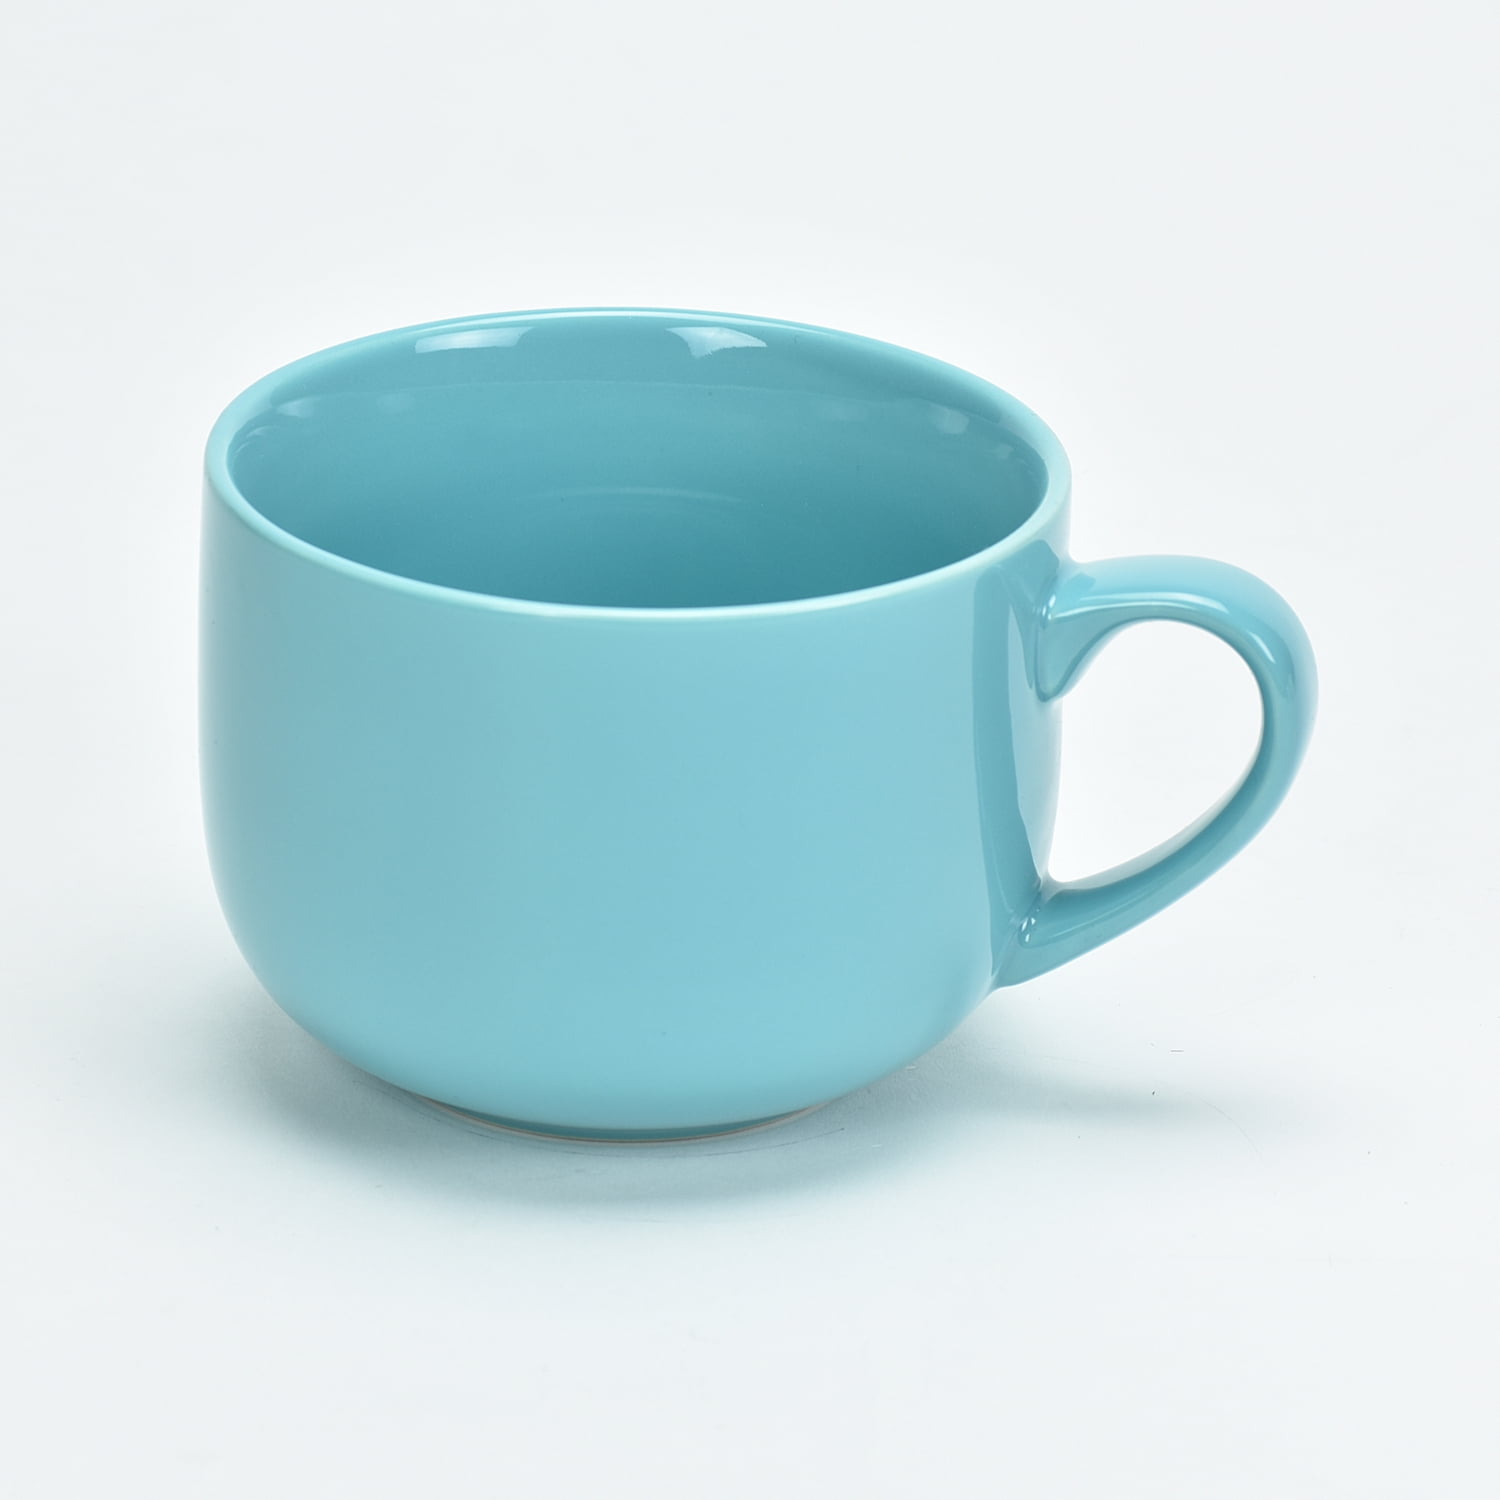 NWT Minnie Mouse Jumbo Coffee Tea Handled Soup Cereal Mug Cup with Gift Box 